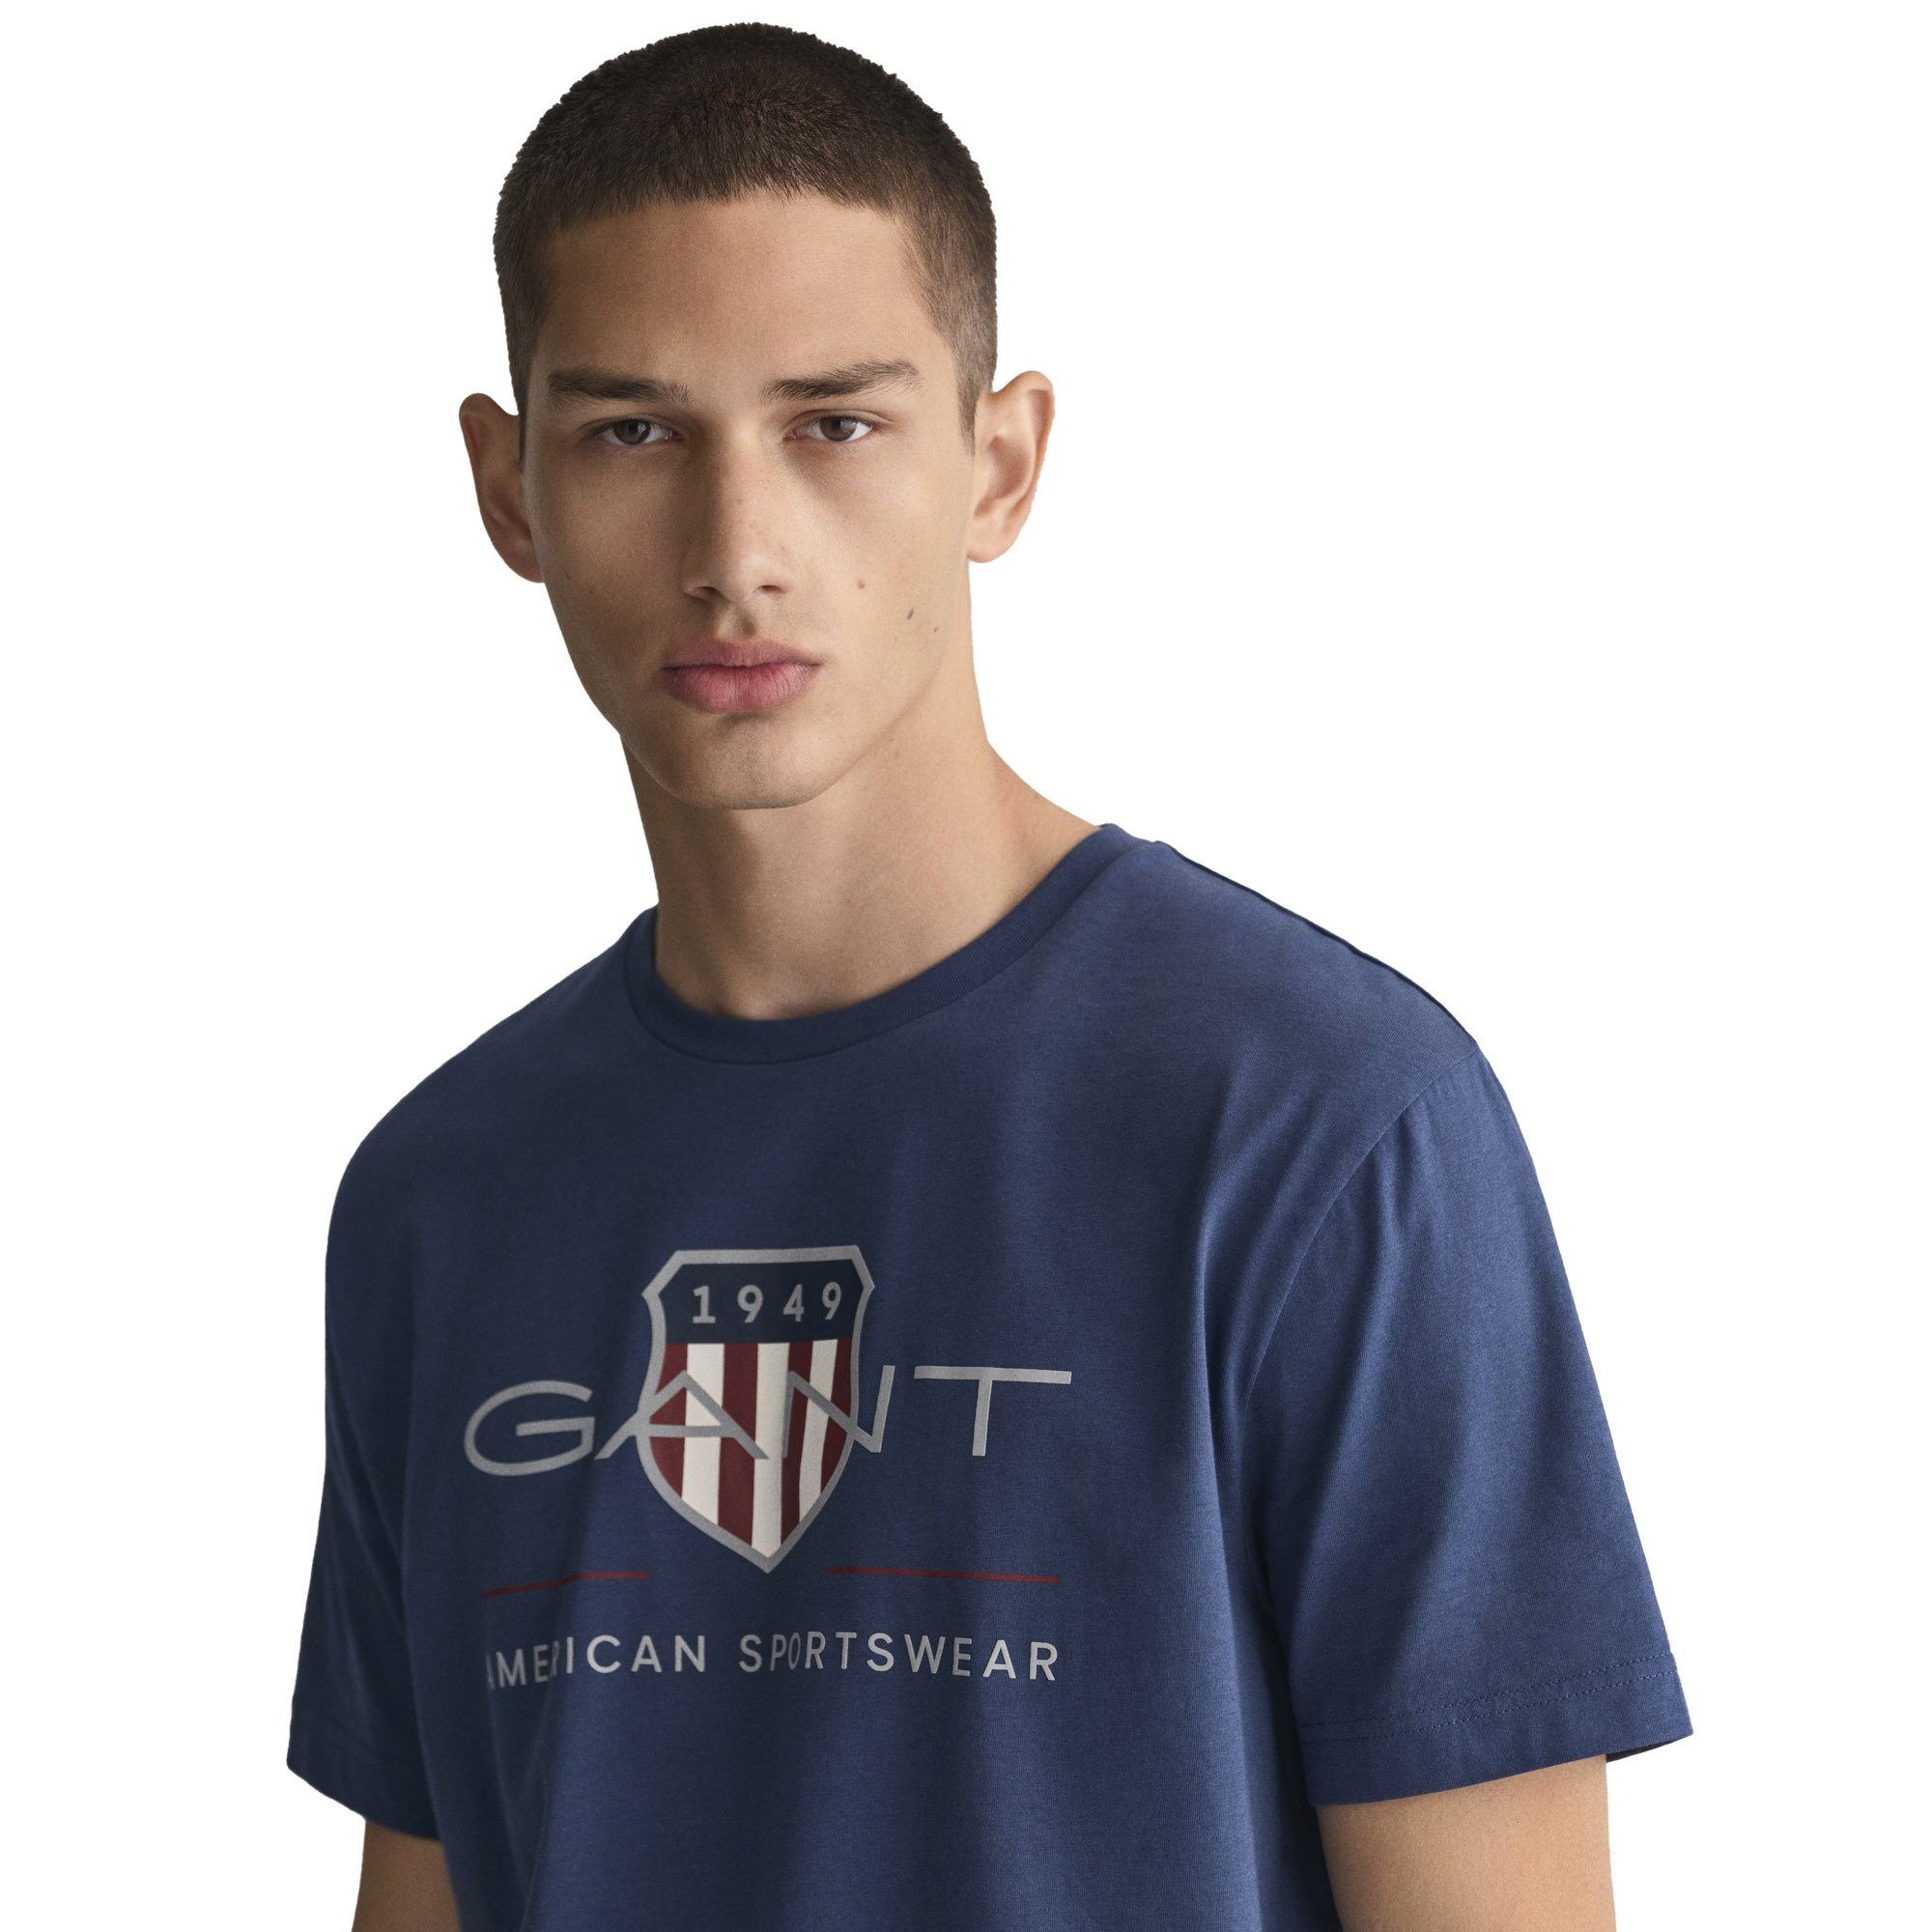 Gant T-Shirt Blue REGULAR SHIELD, (Dusty Blau ARCHIVE Rundhals Herren T-Shirt Sea) -